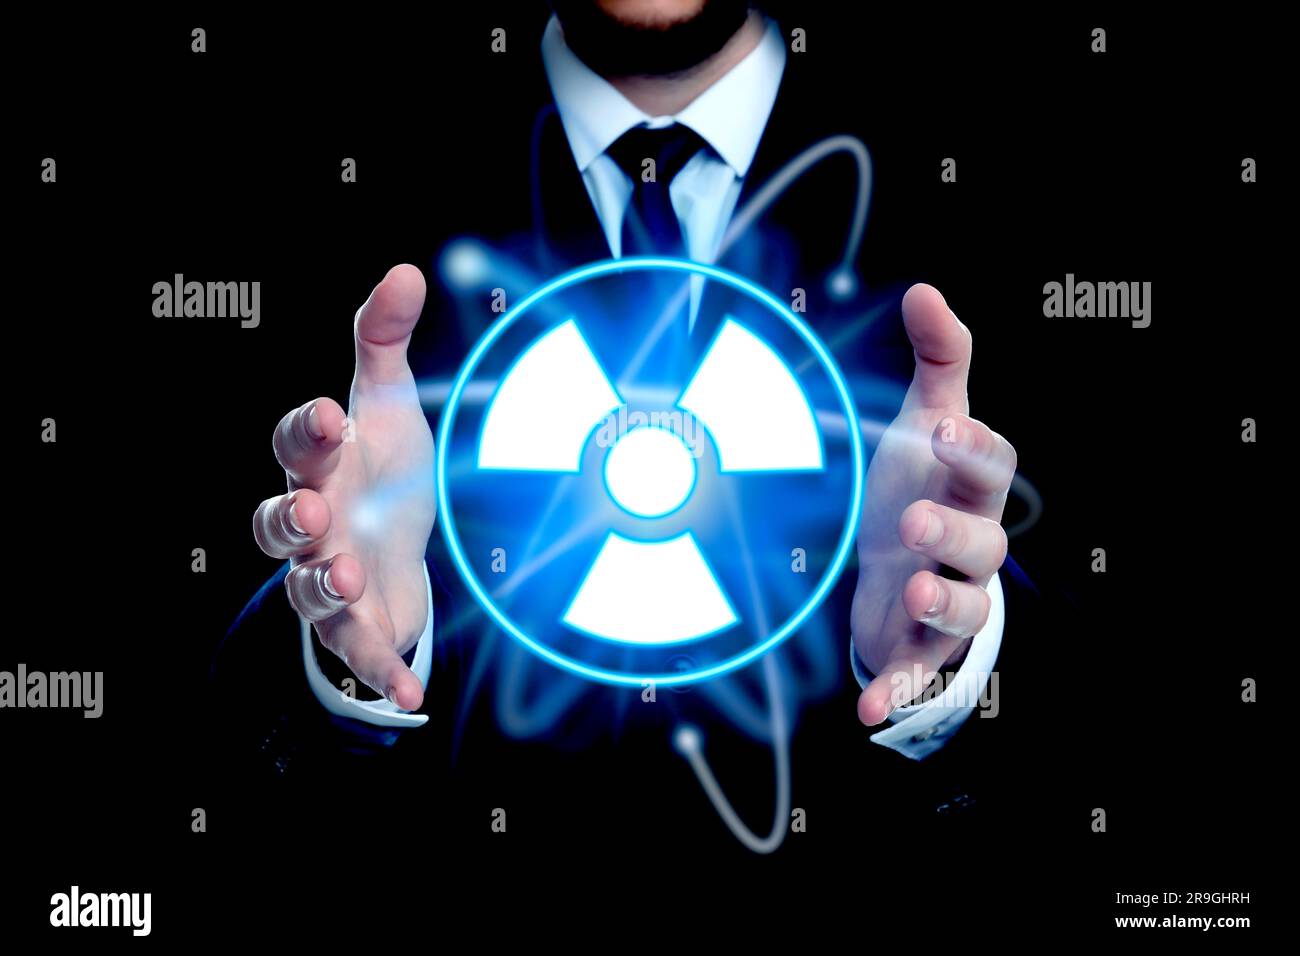 Man holding glowing atom symbol with radiation warning sign on black background, closeup Stock Photo